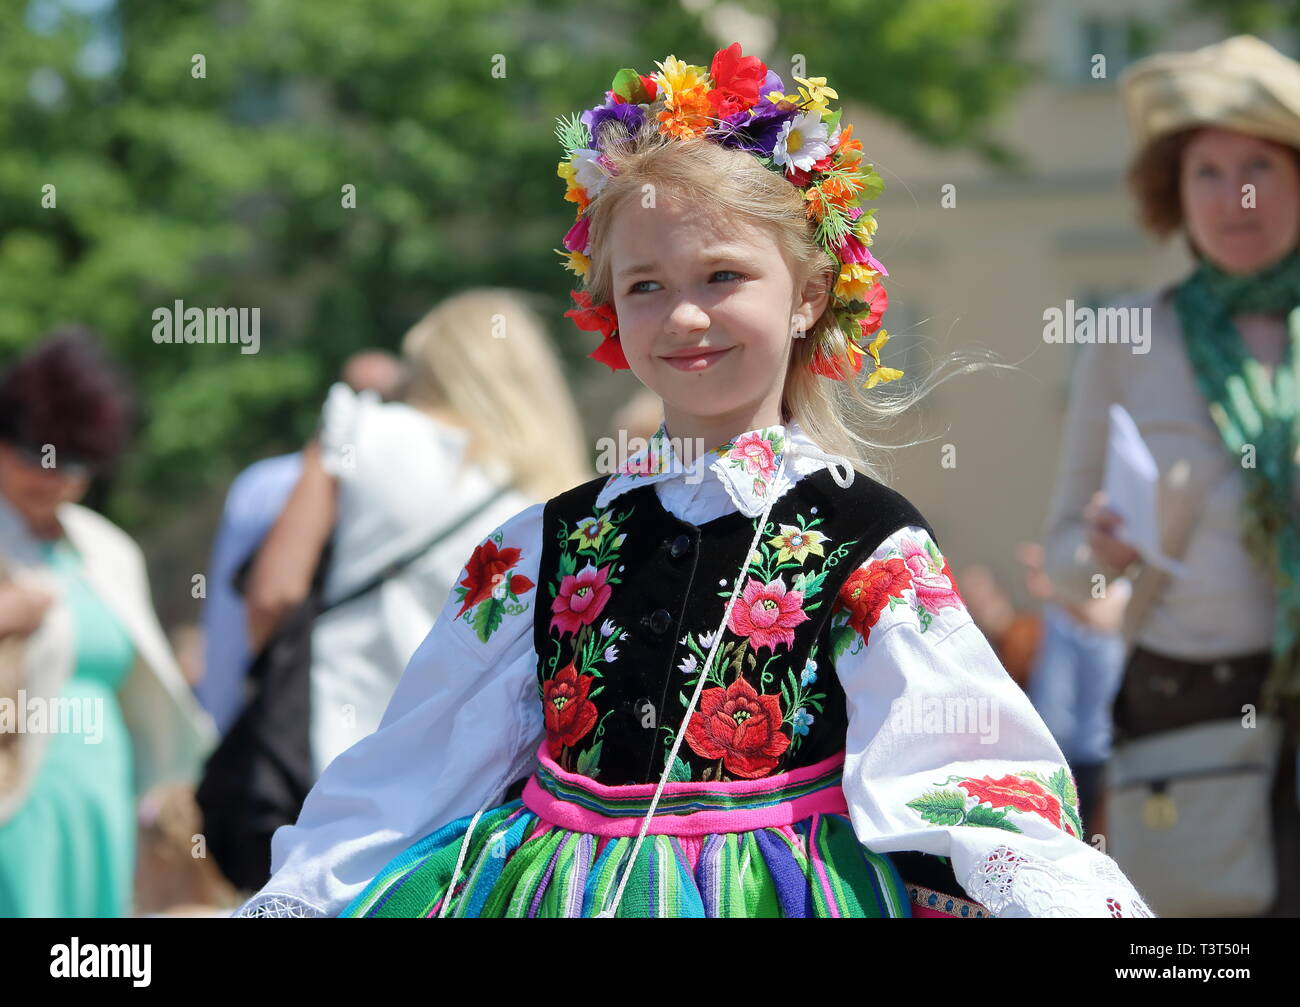 poco Moderar Amado Traje tradicional polaco fotografías e imágenes de alta resolución - Alamy